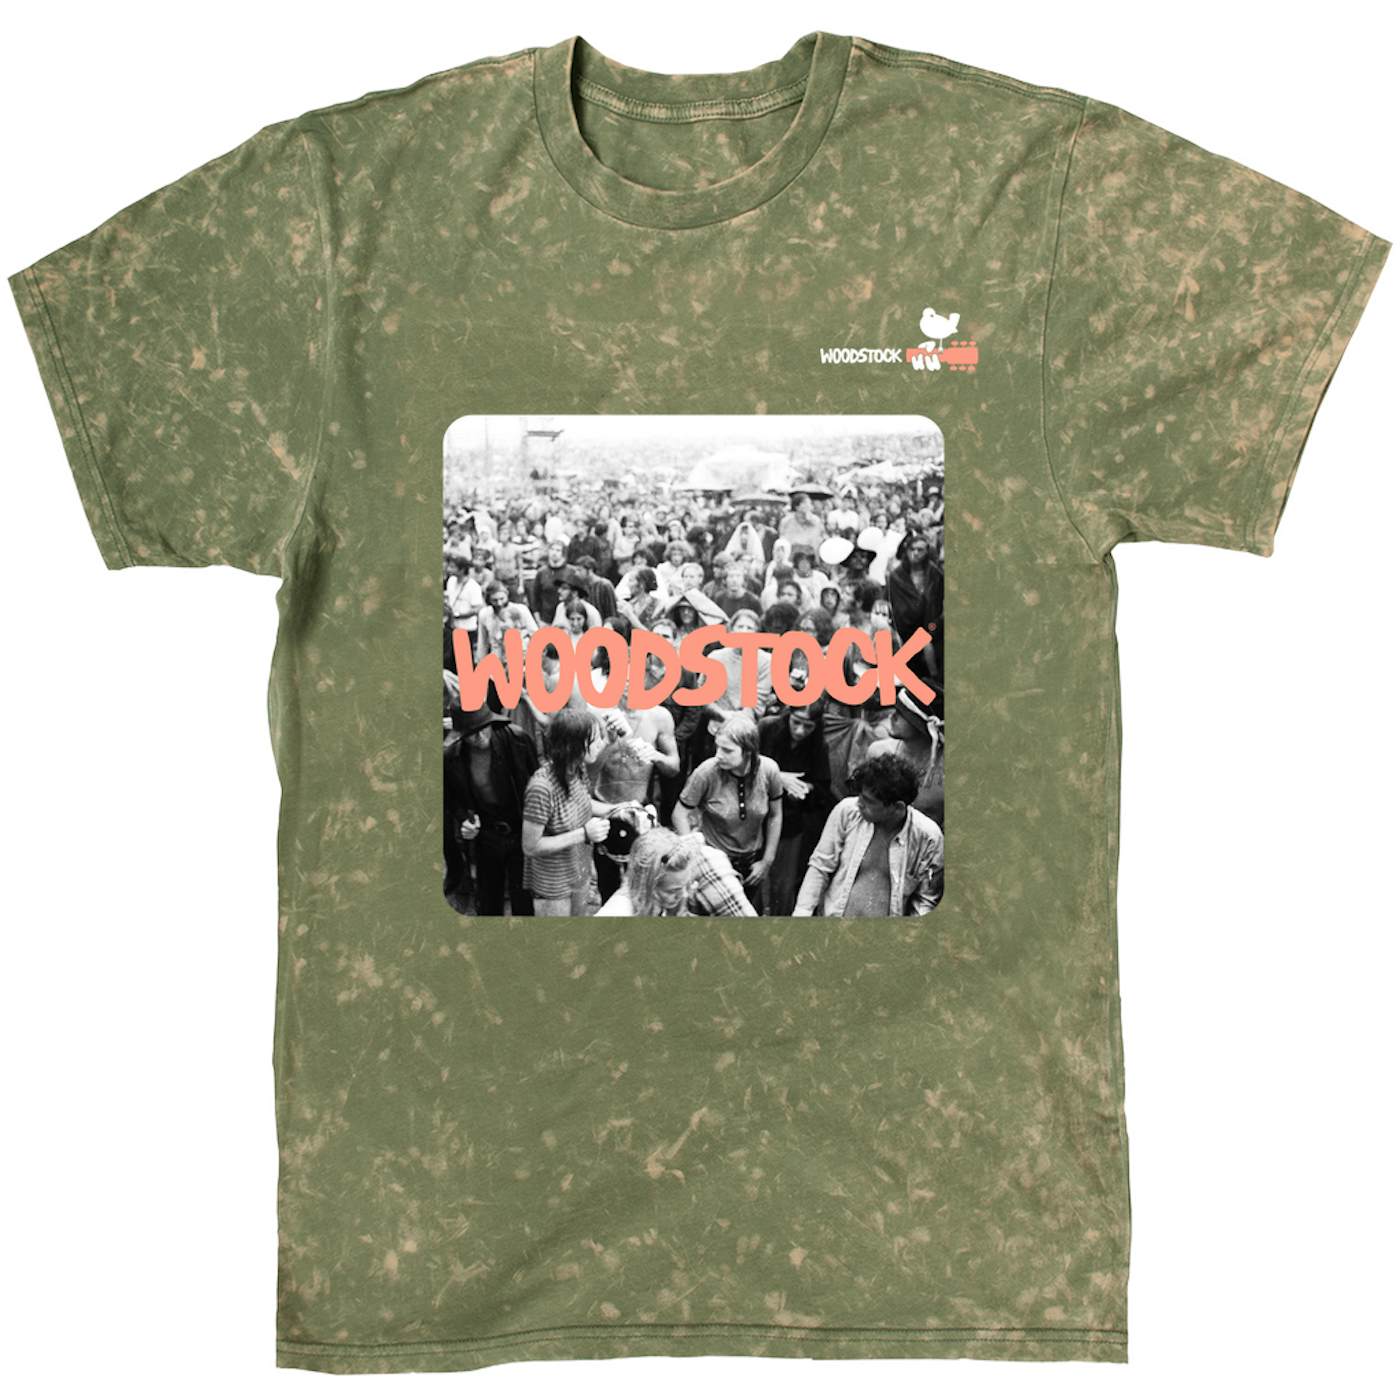 Woodstock T-shirt | Festival Concert Photo (Merchbar Exclusive) Woodstock Mineral Wash Shirt